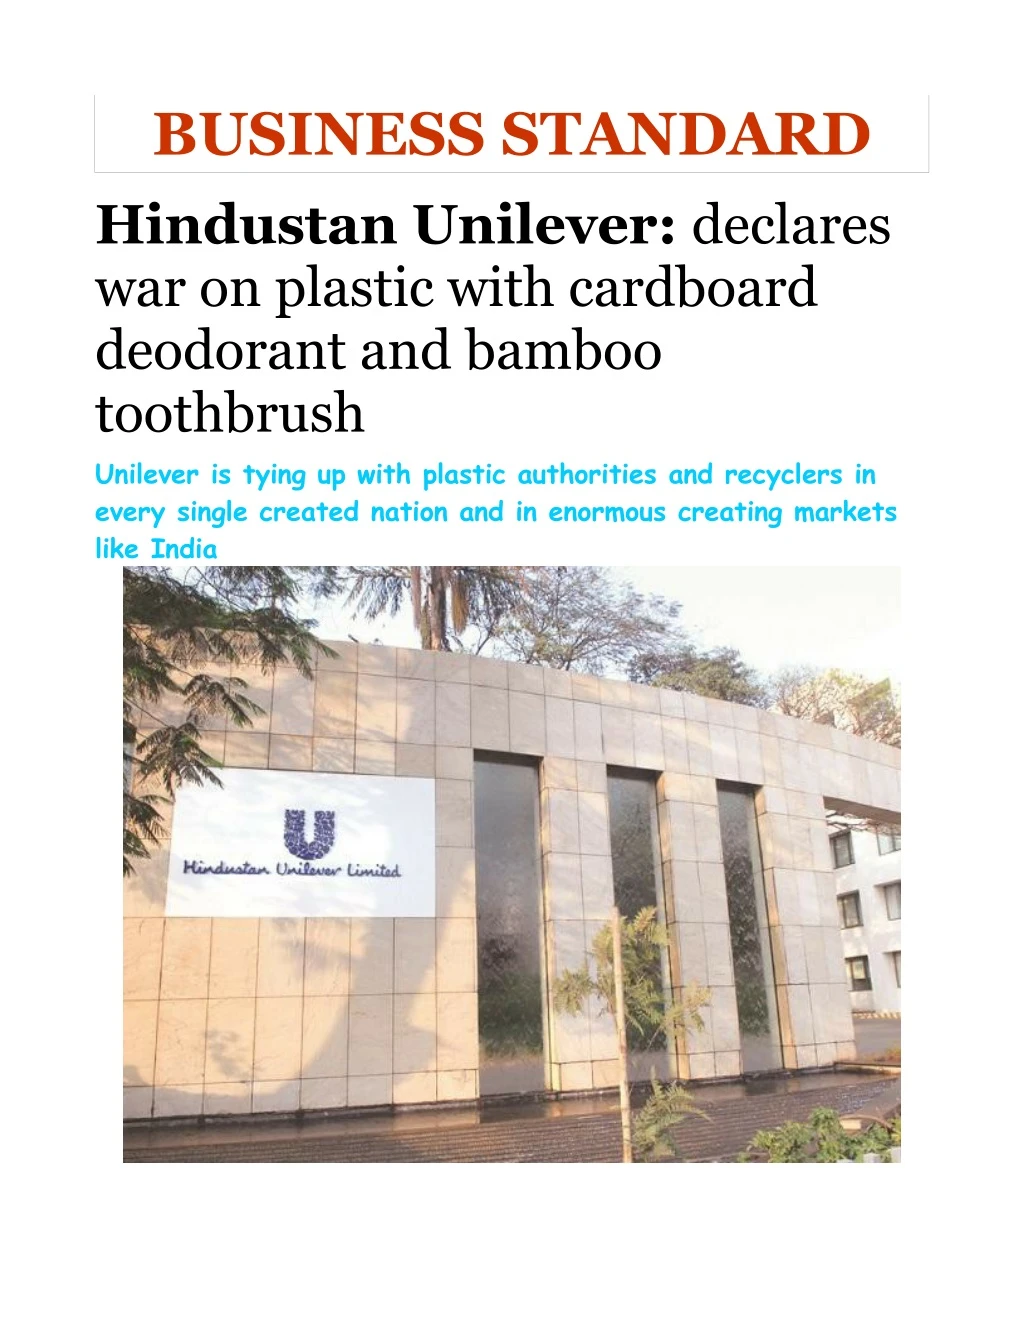 Hindustan unilever declares war on plastic with cardboard deodorant and bamboo toothbrush